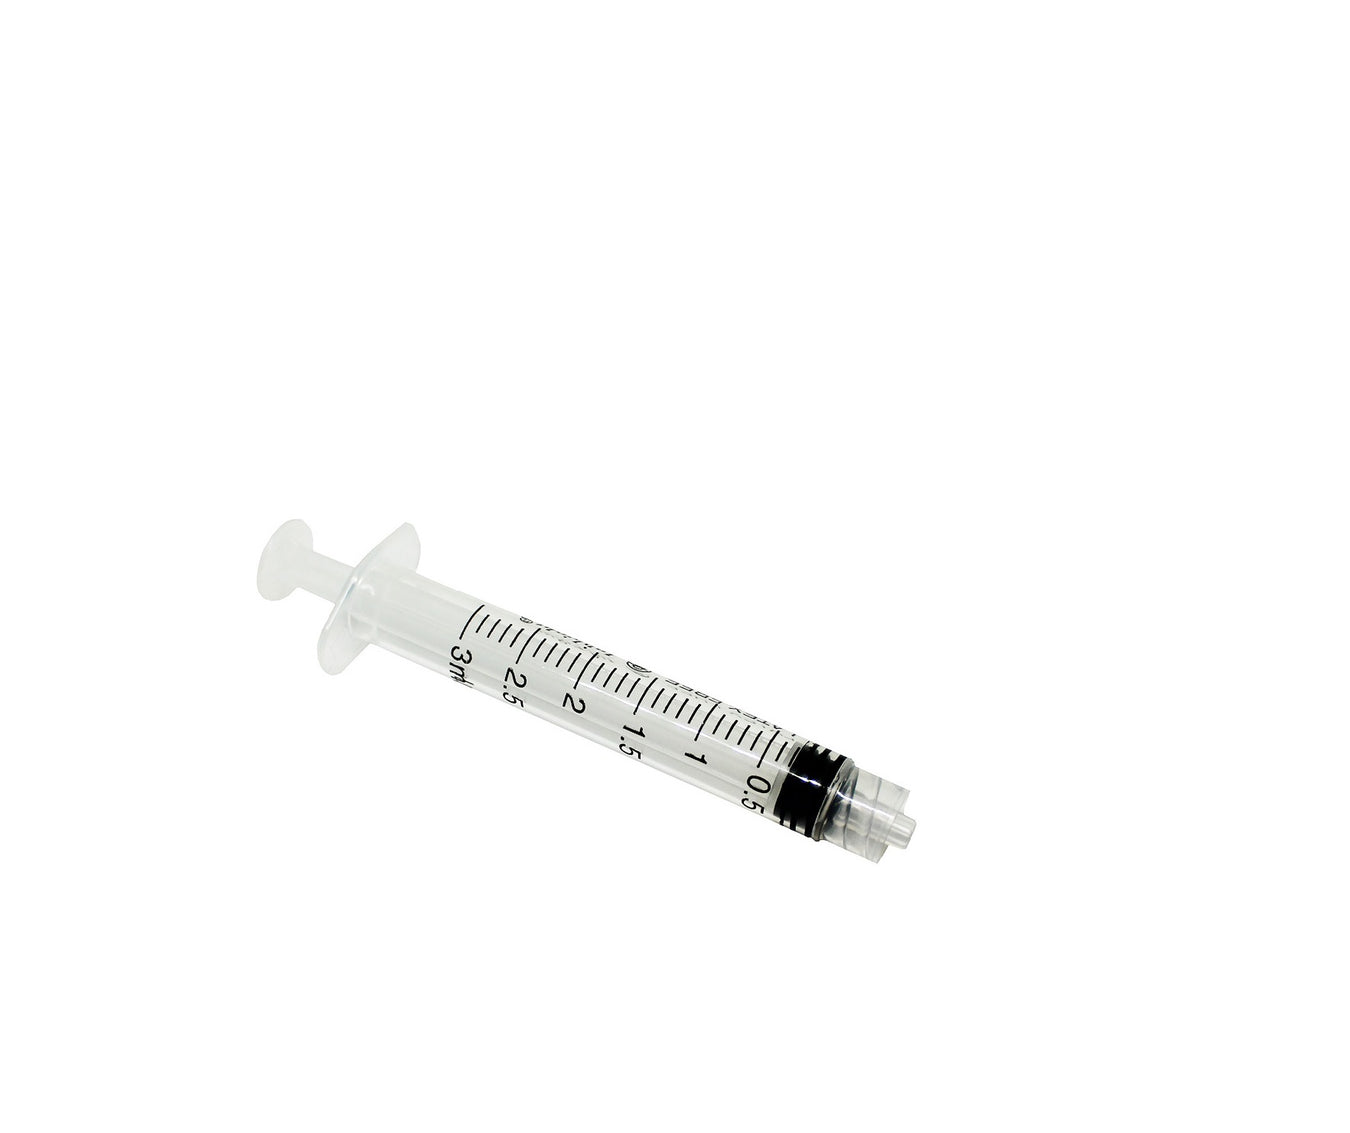 3ml luer lock syringe